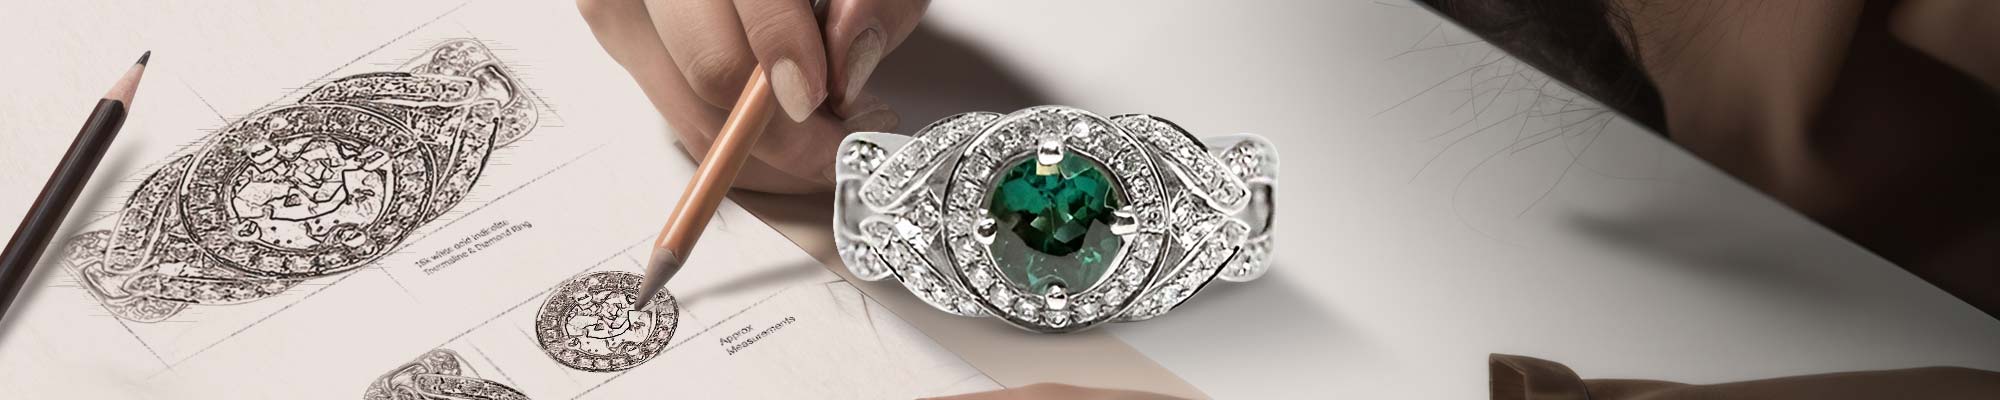 Custom Jewelry Design At Brummitt Jewelry Design Studio LLC